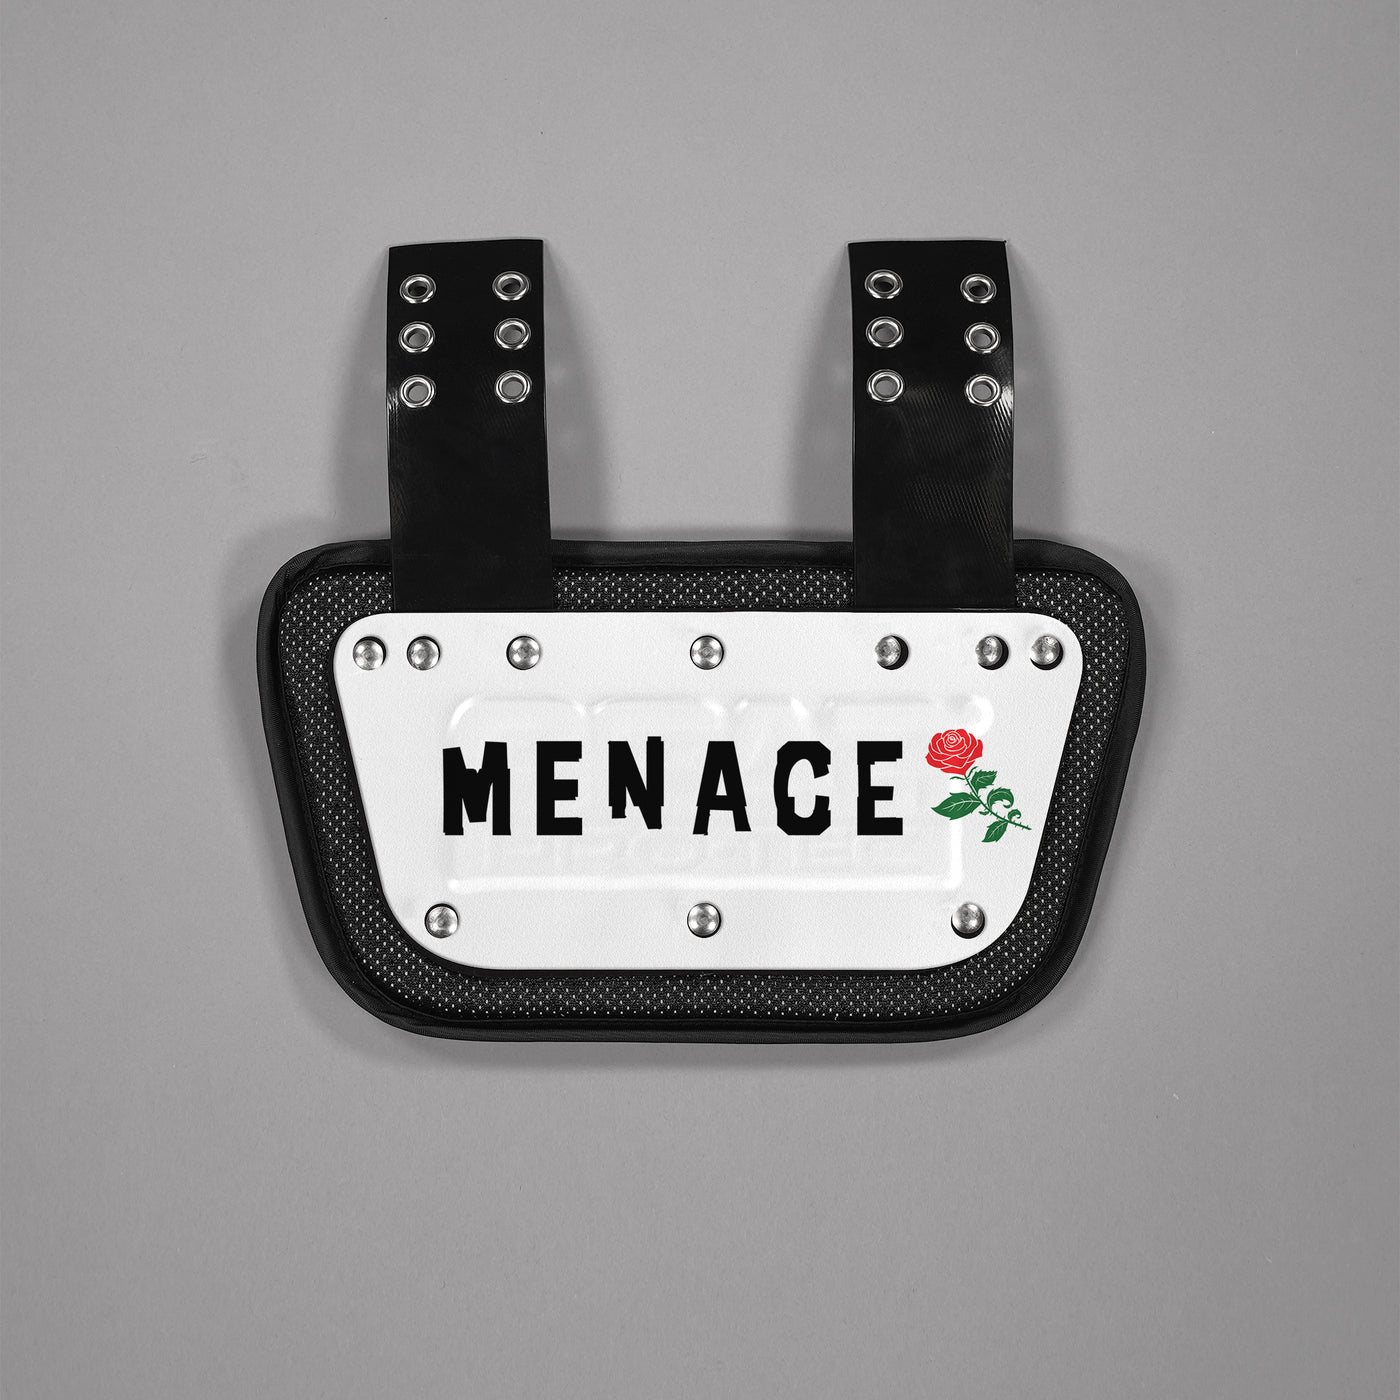 Menace Sticker for Back Plate